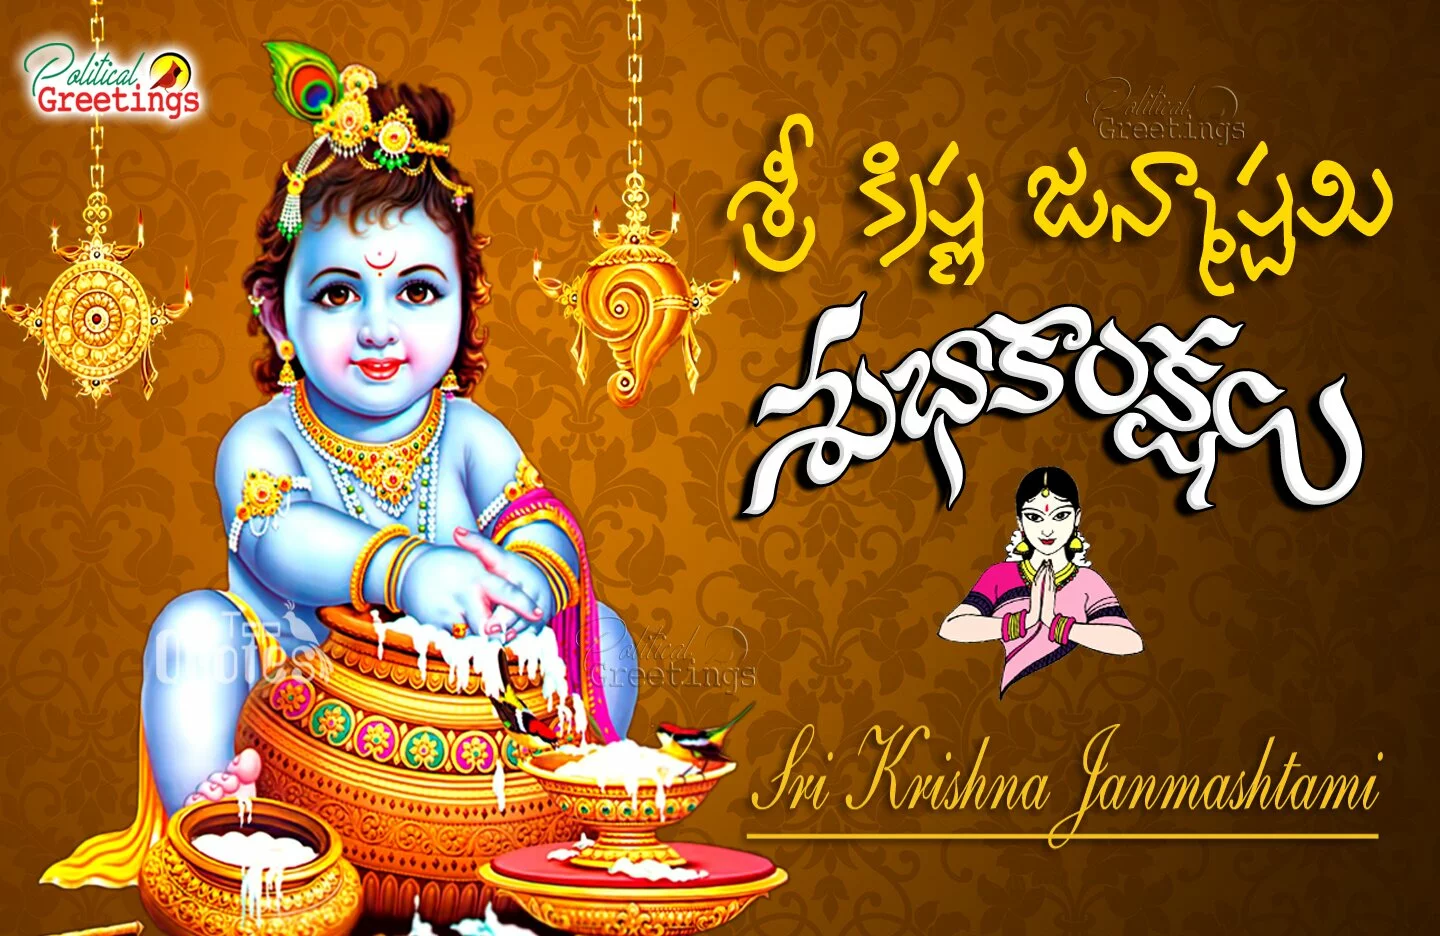 Happy Krishnasthami Telugu Greetings with lord krishna Hd Wallpapers